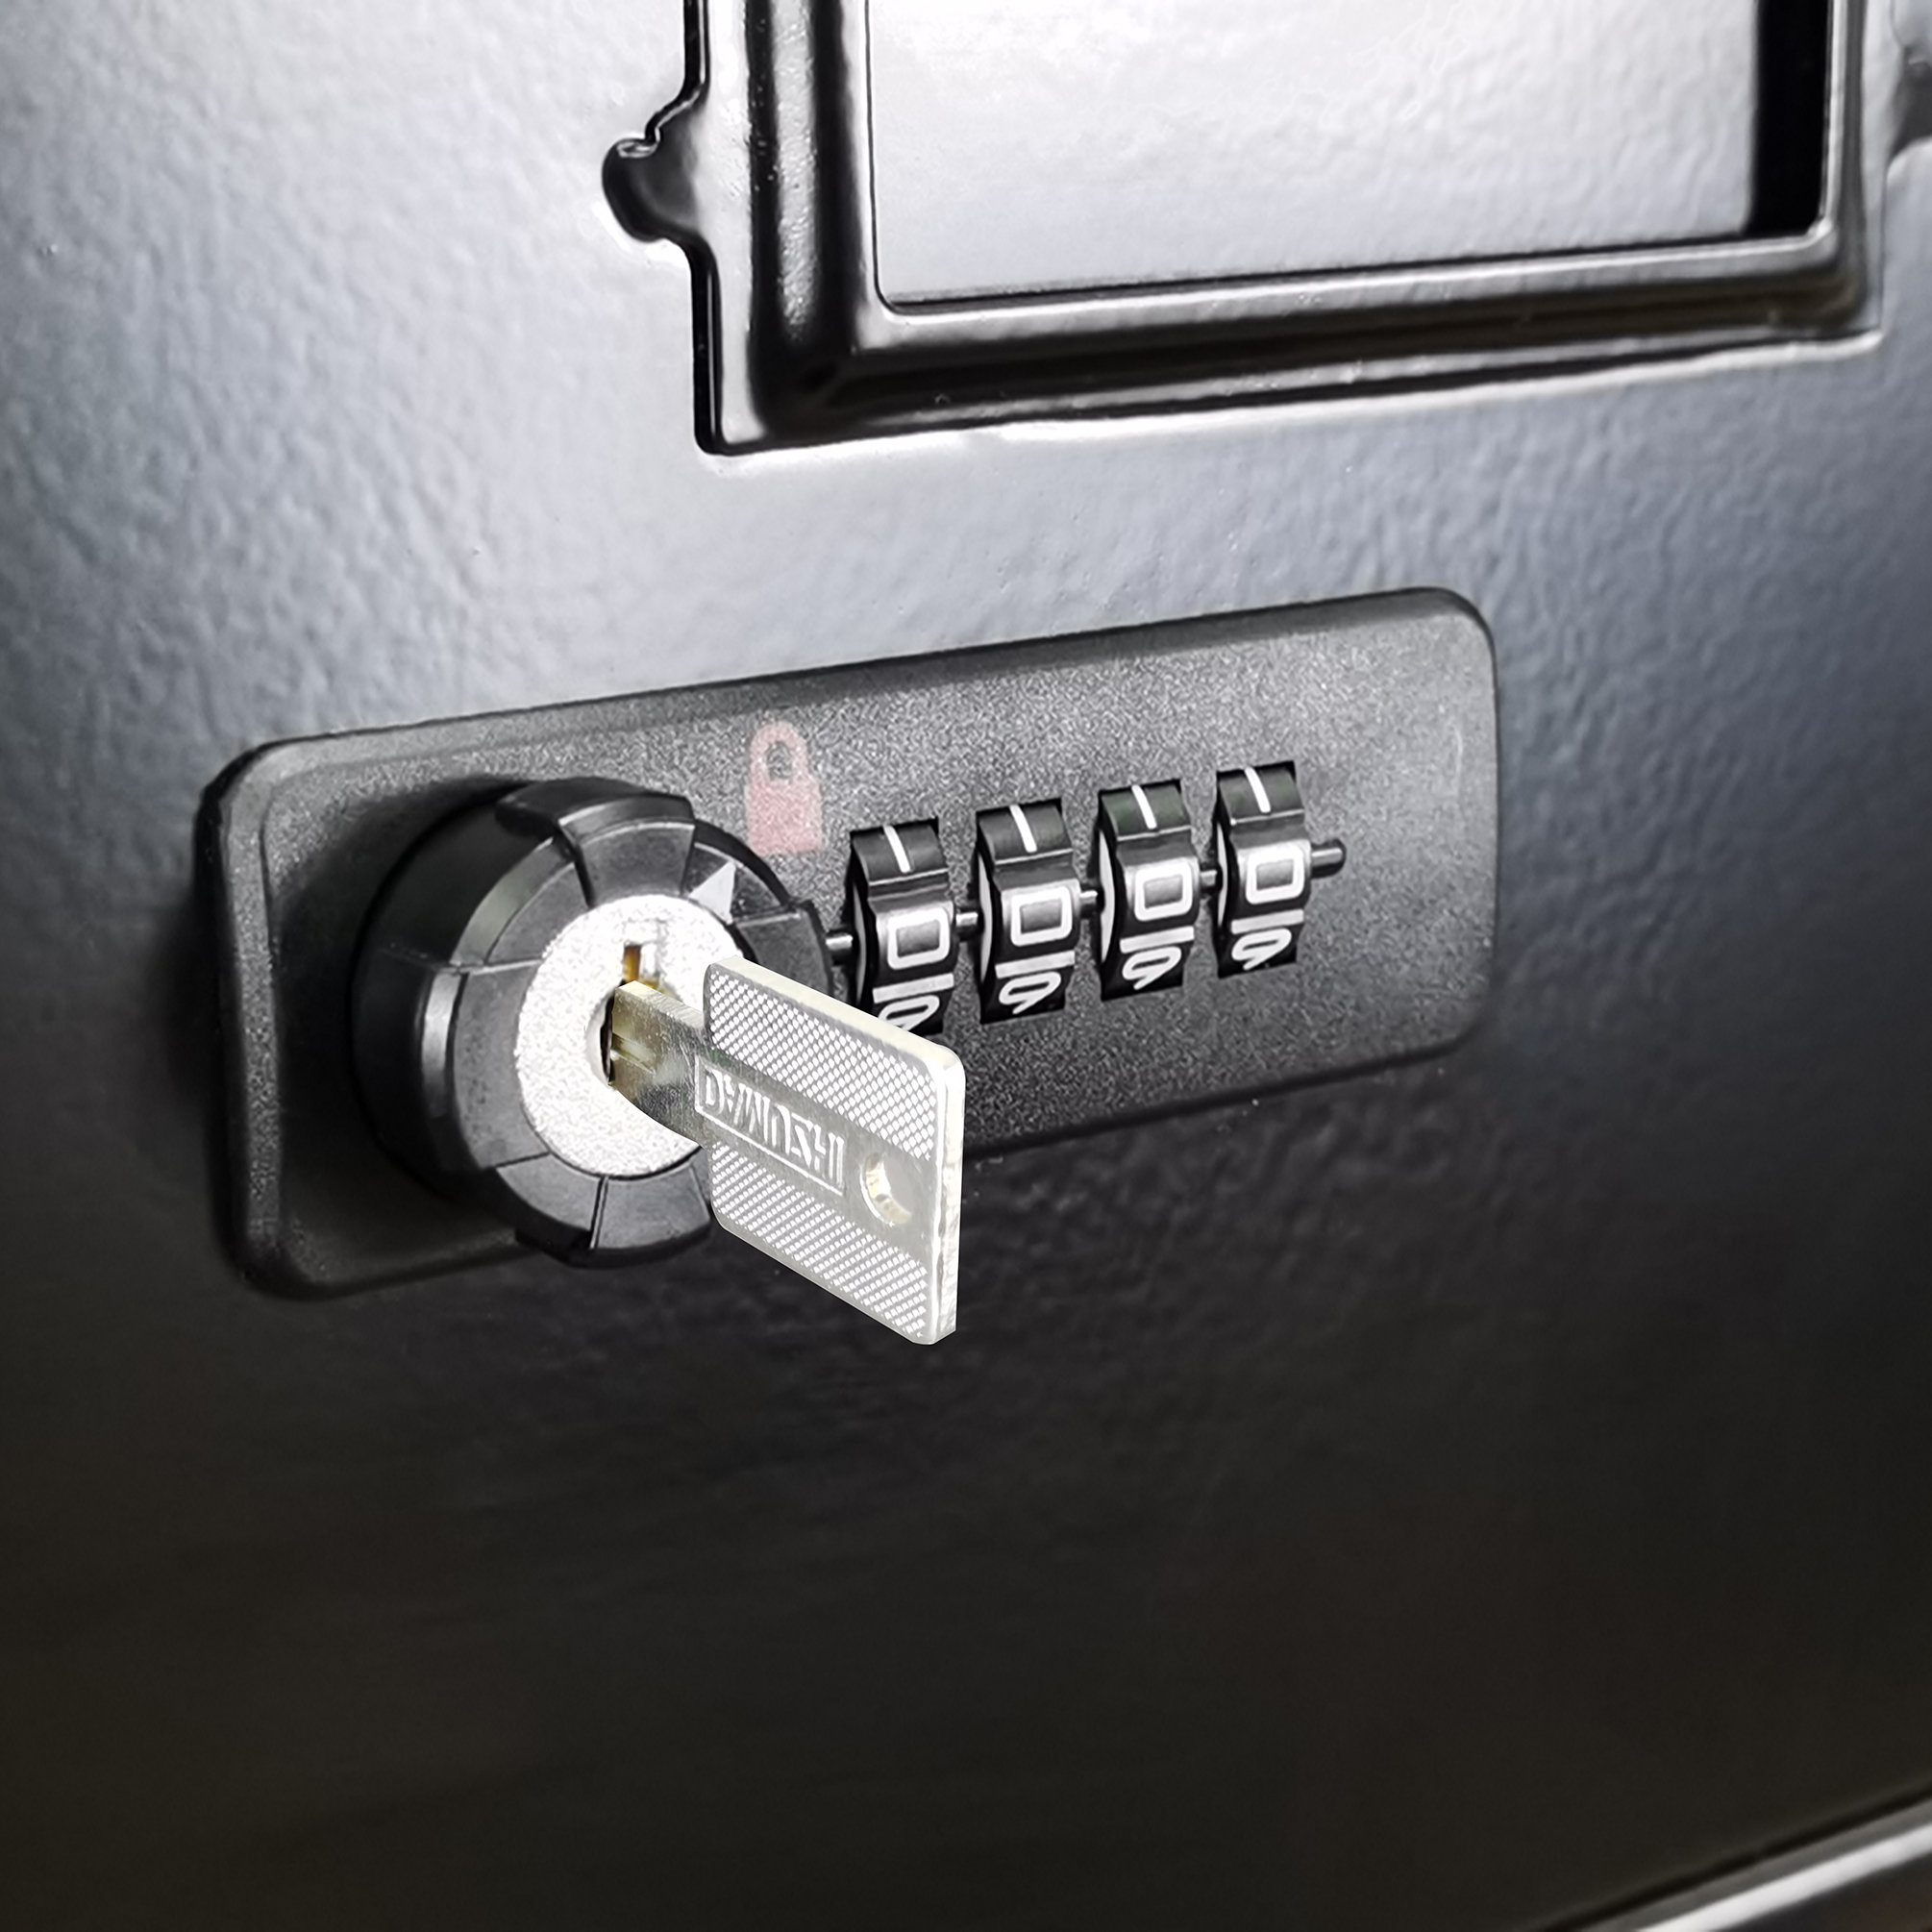 FixtureDisplays Administration Key Master Key for Combination Lock